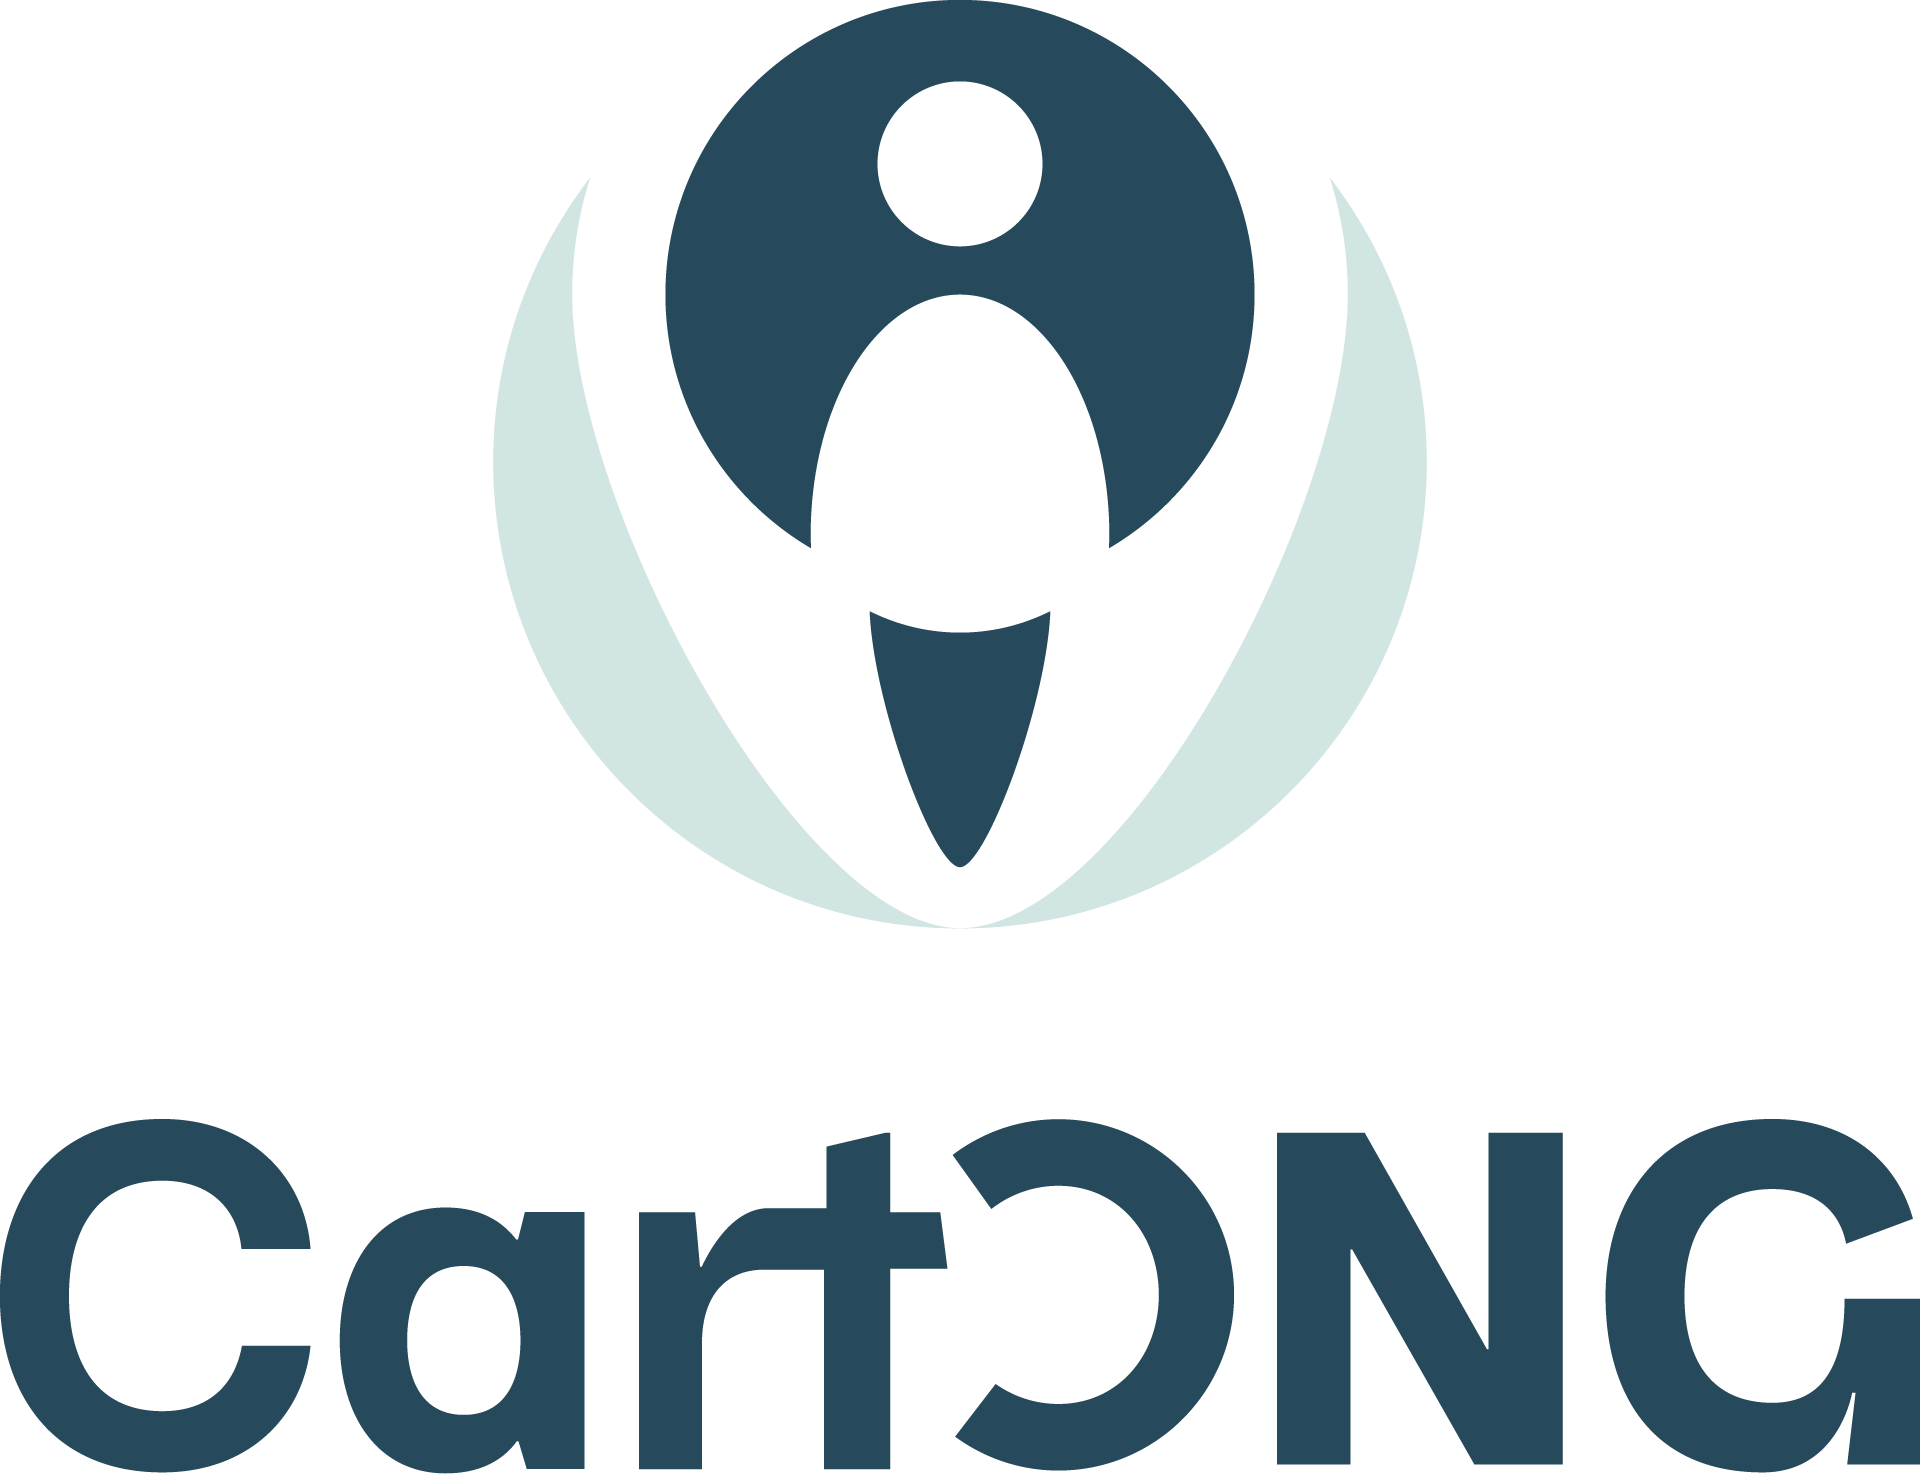 File:CartONG logo.png